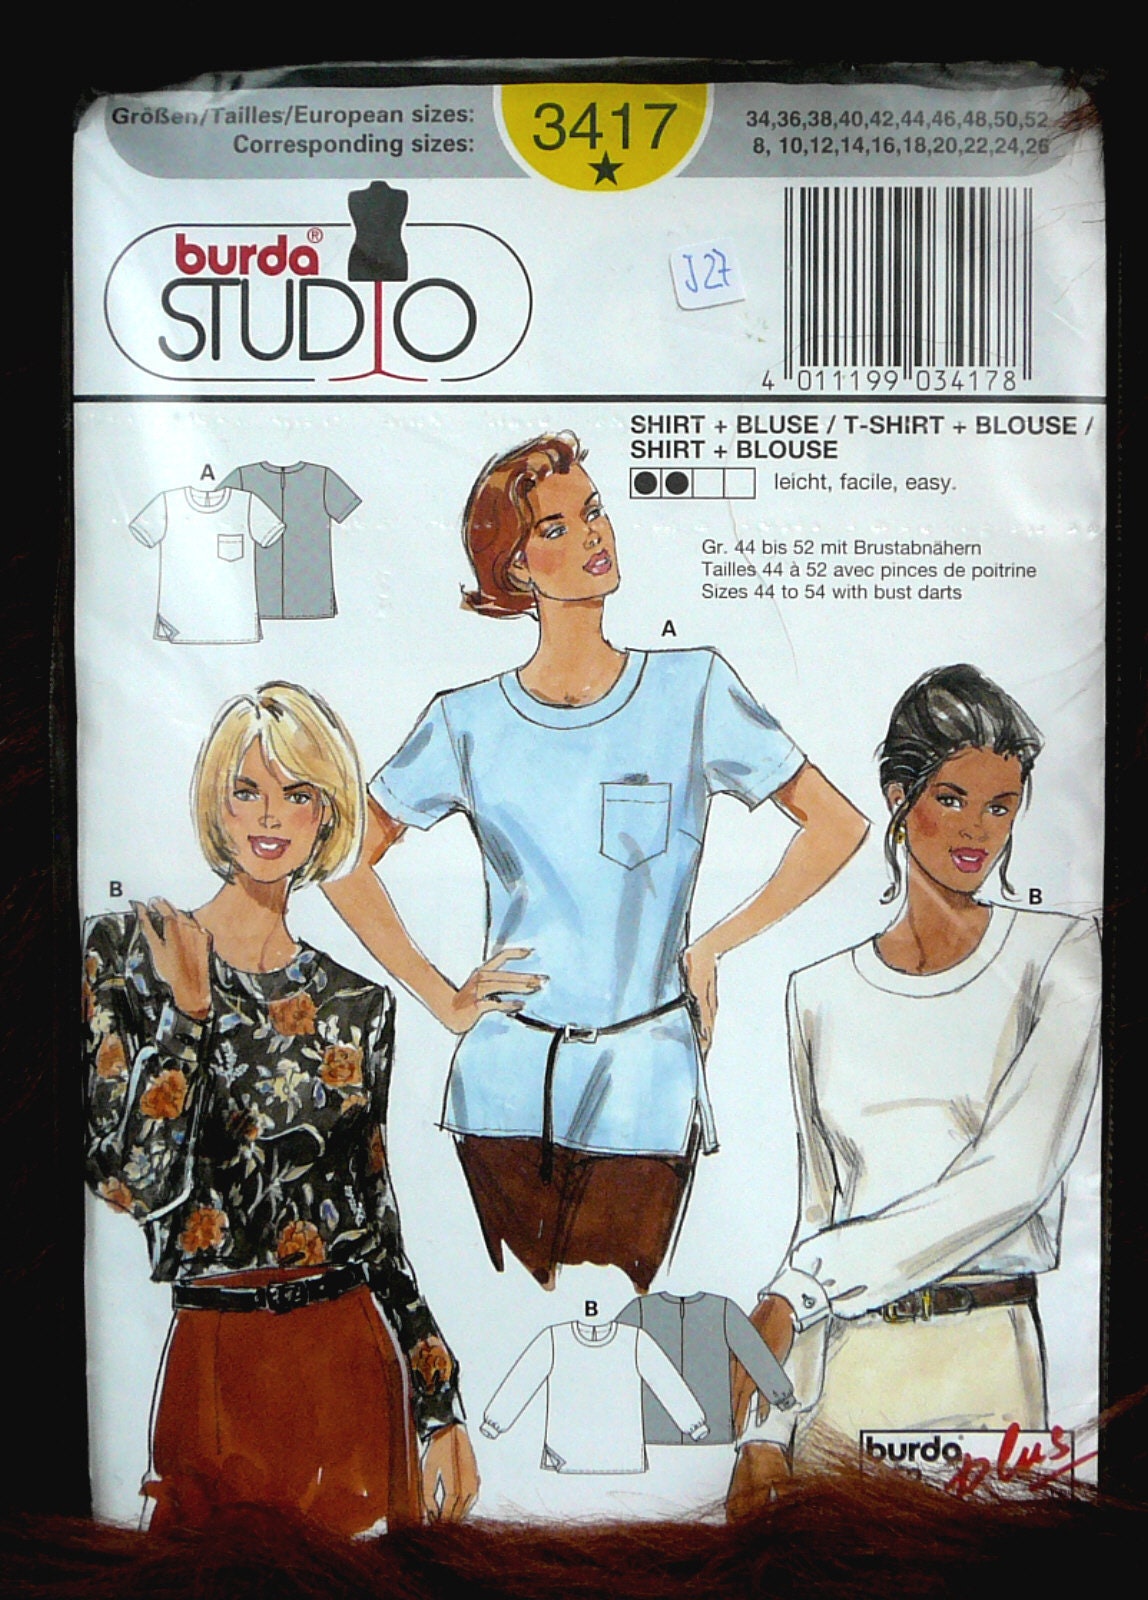 Burda Studio 3417 multisize cut 44 52 OVP shirt blouse | Etsy